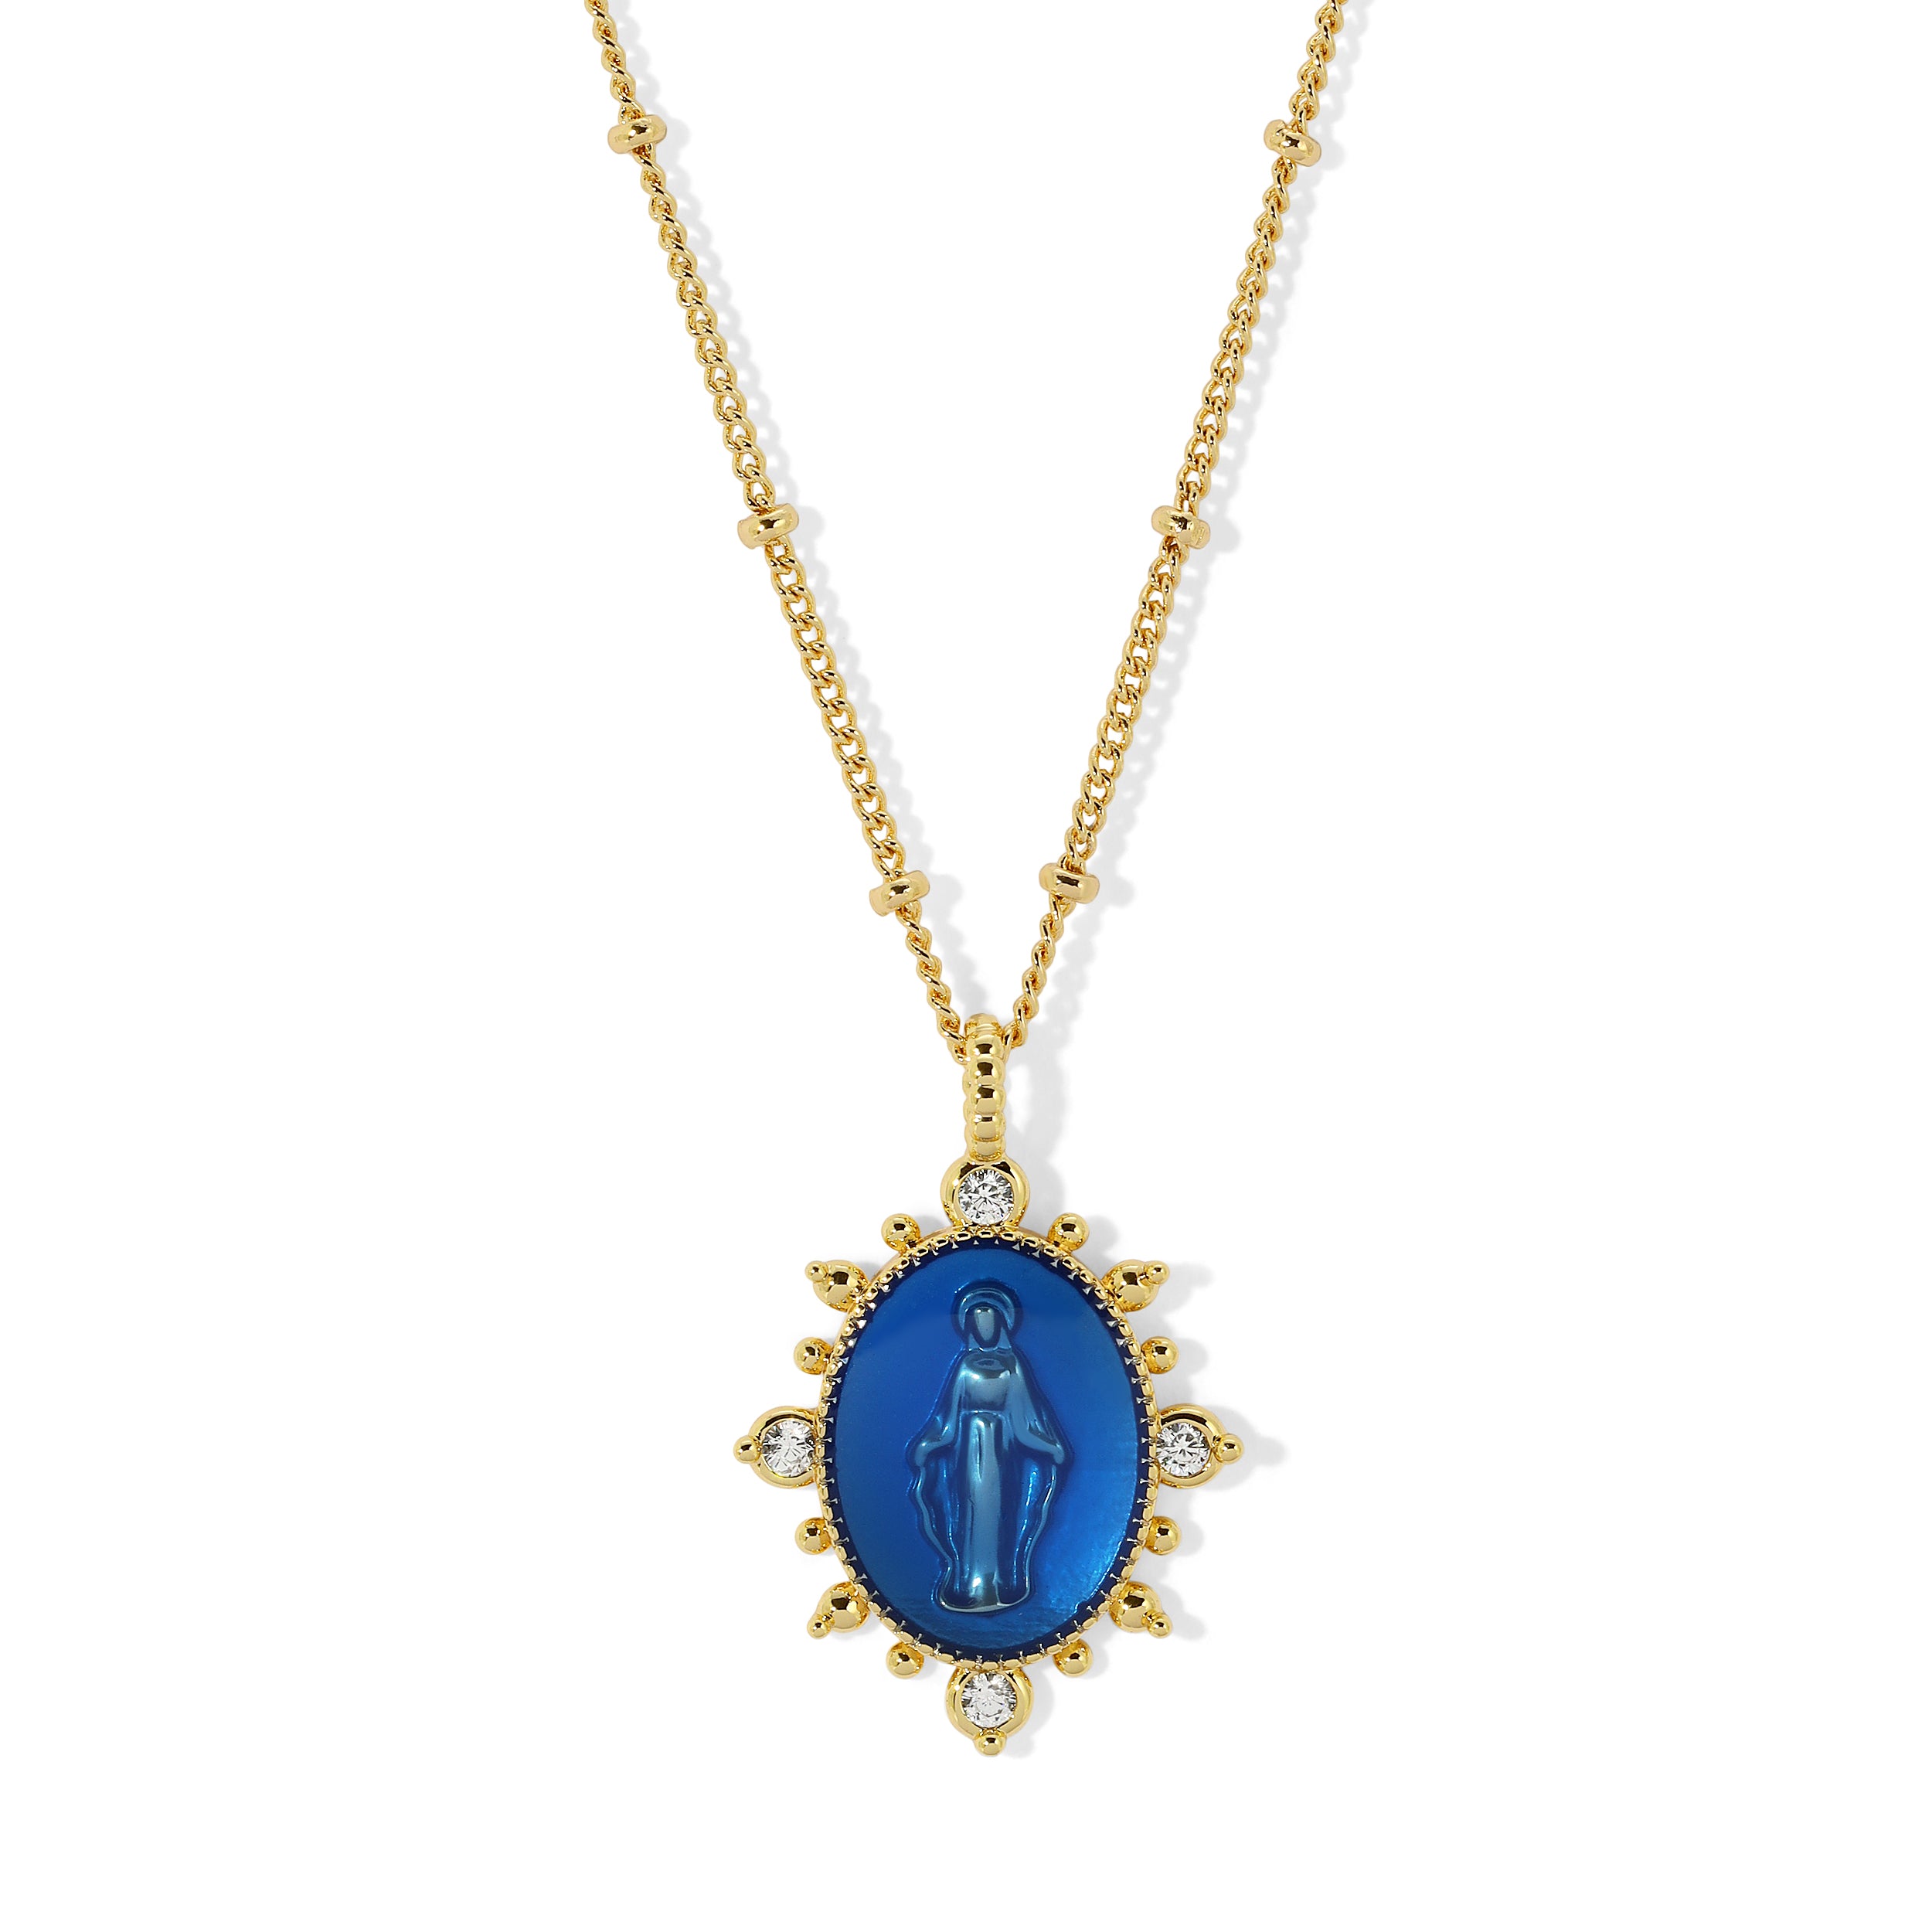 Lady Lourdes Necklace in True Blue